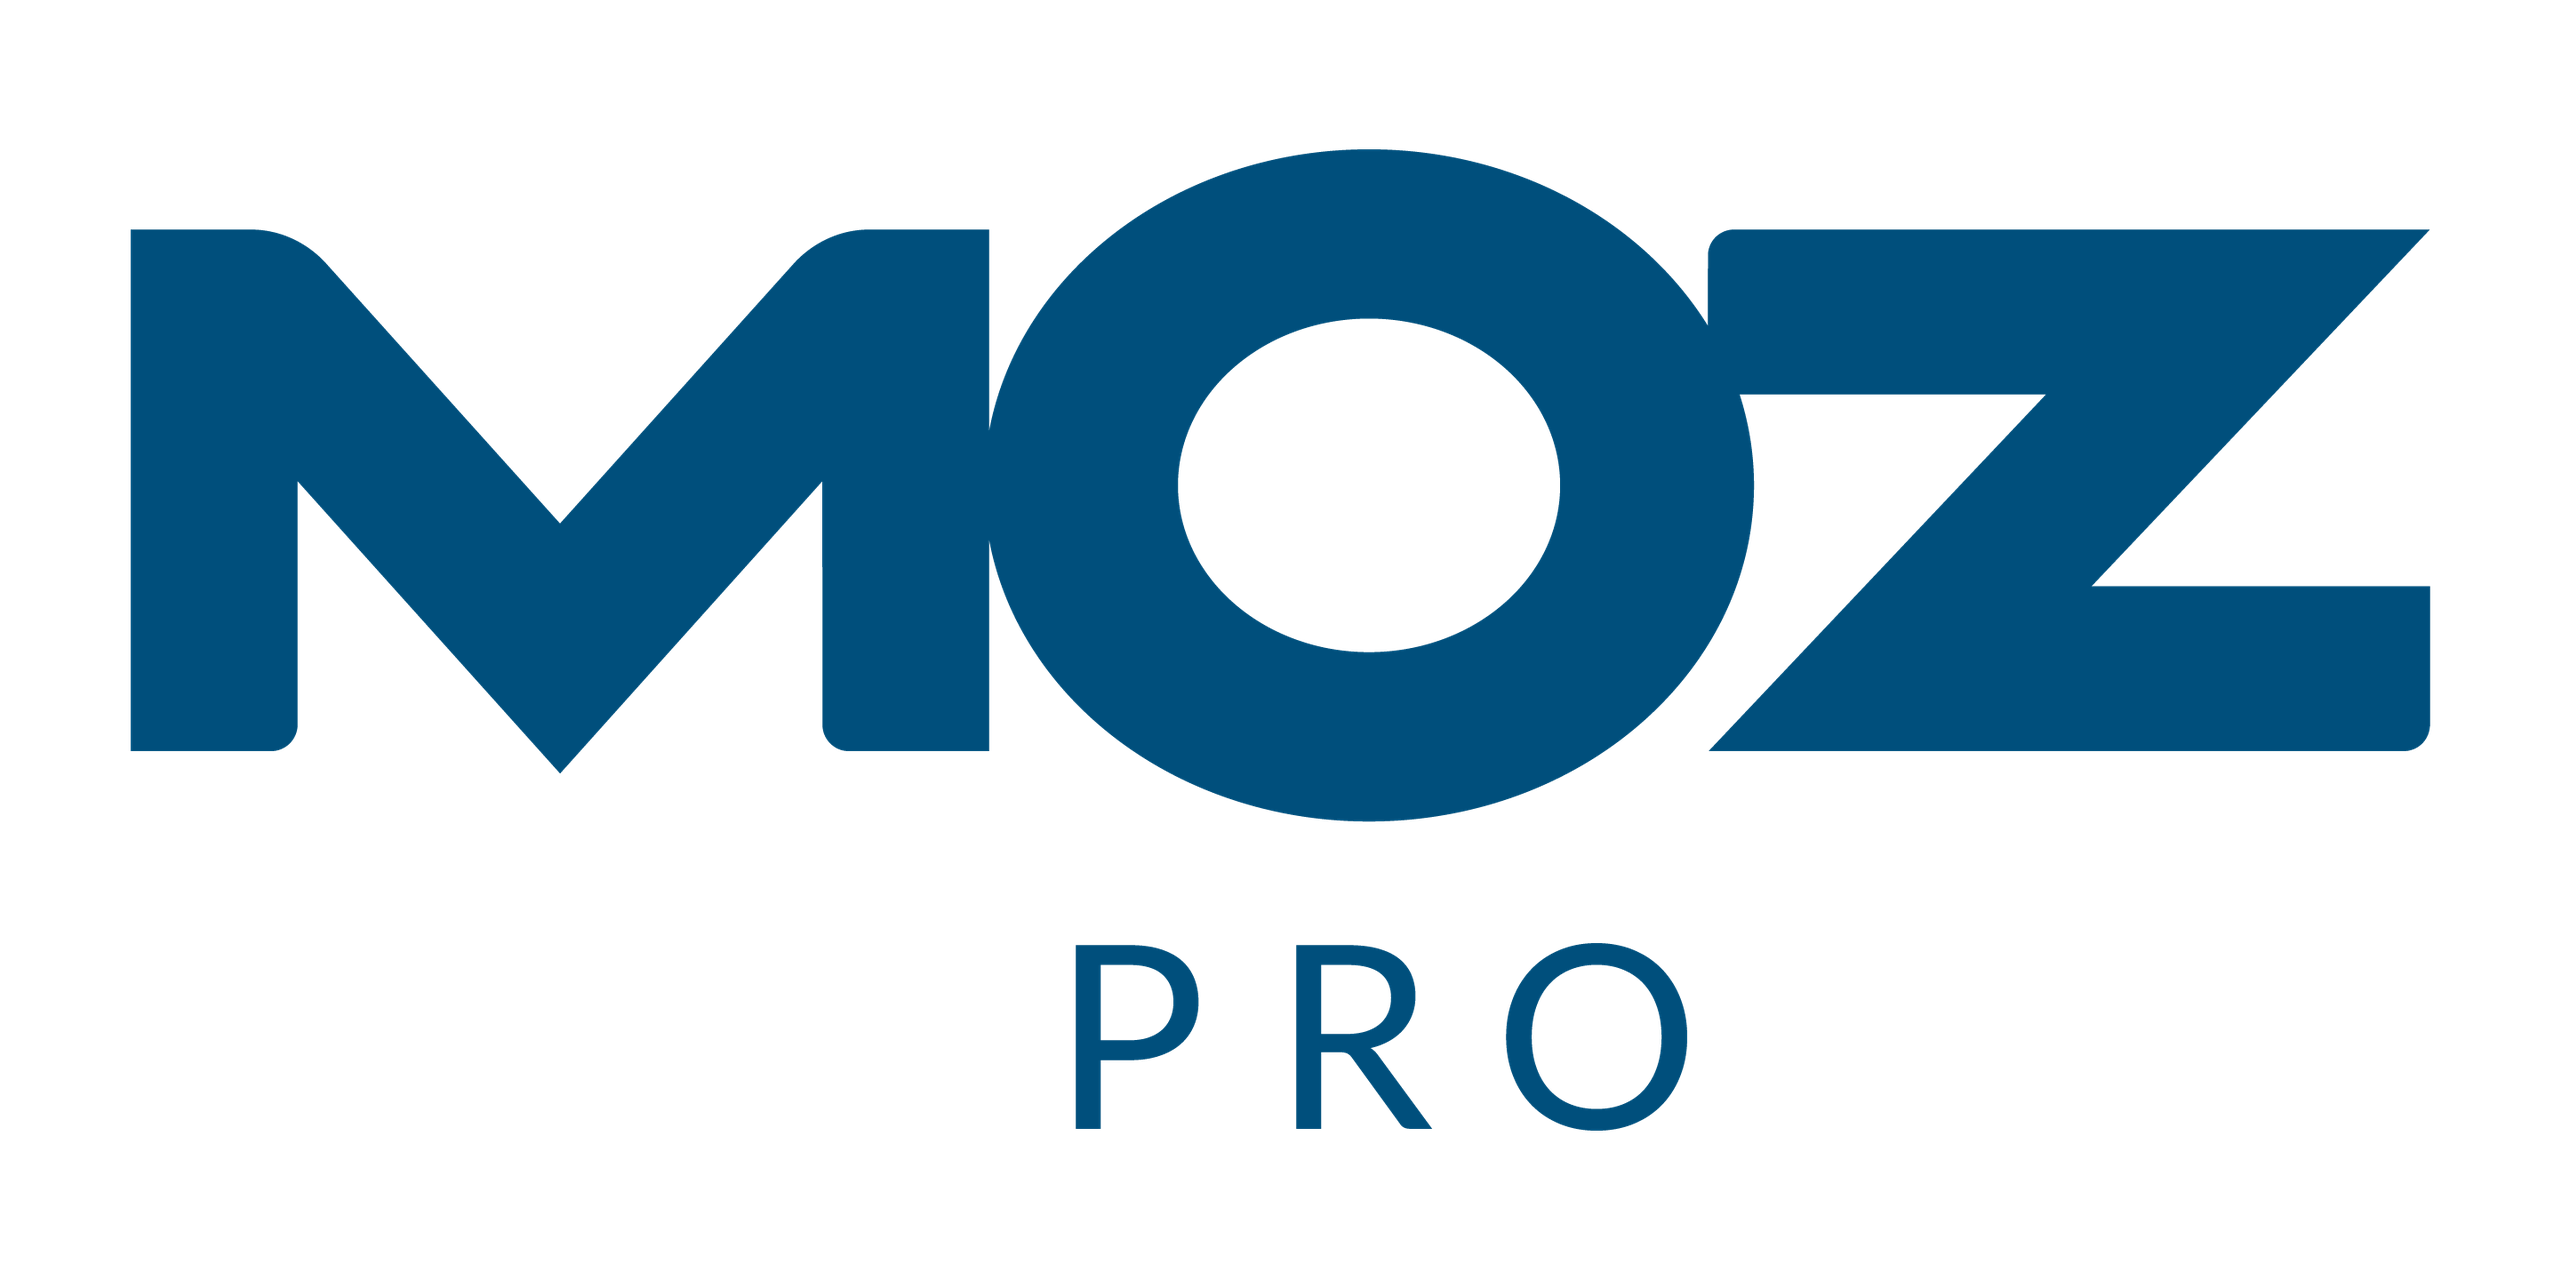 Moz Logo